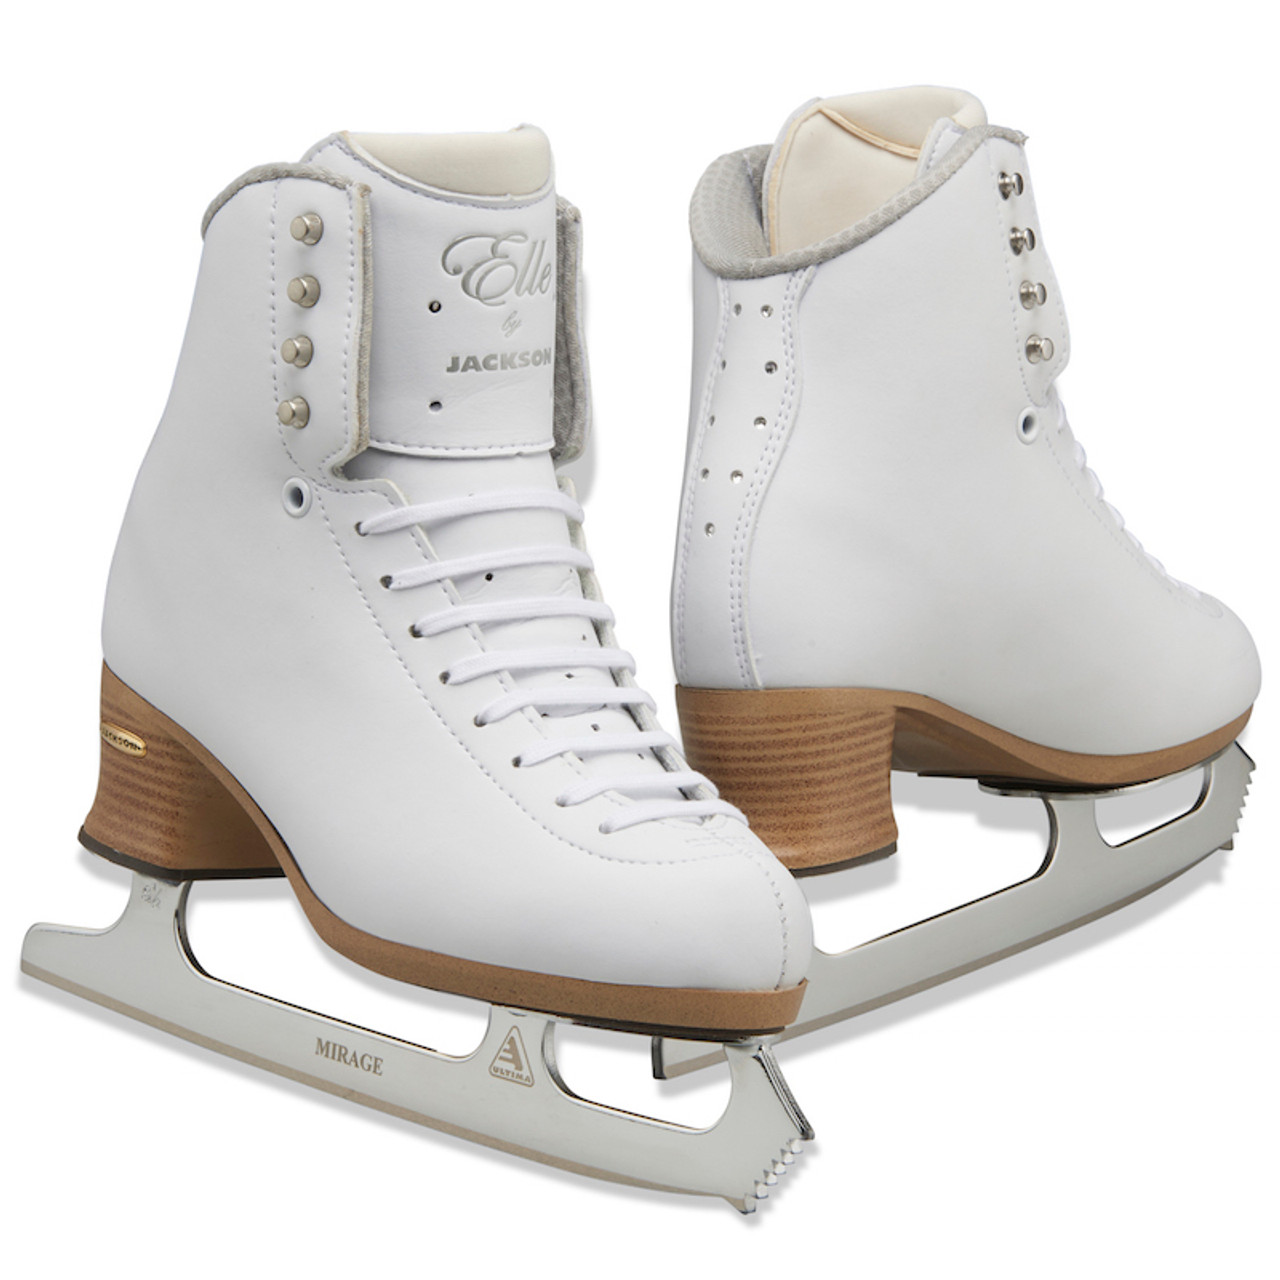 girls ice skating boots